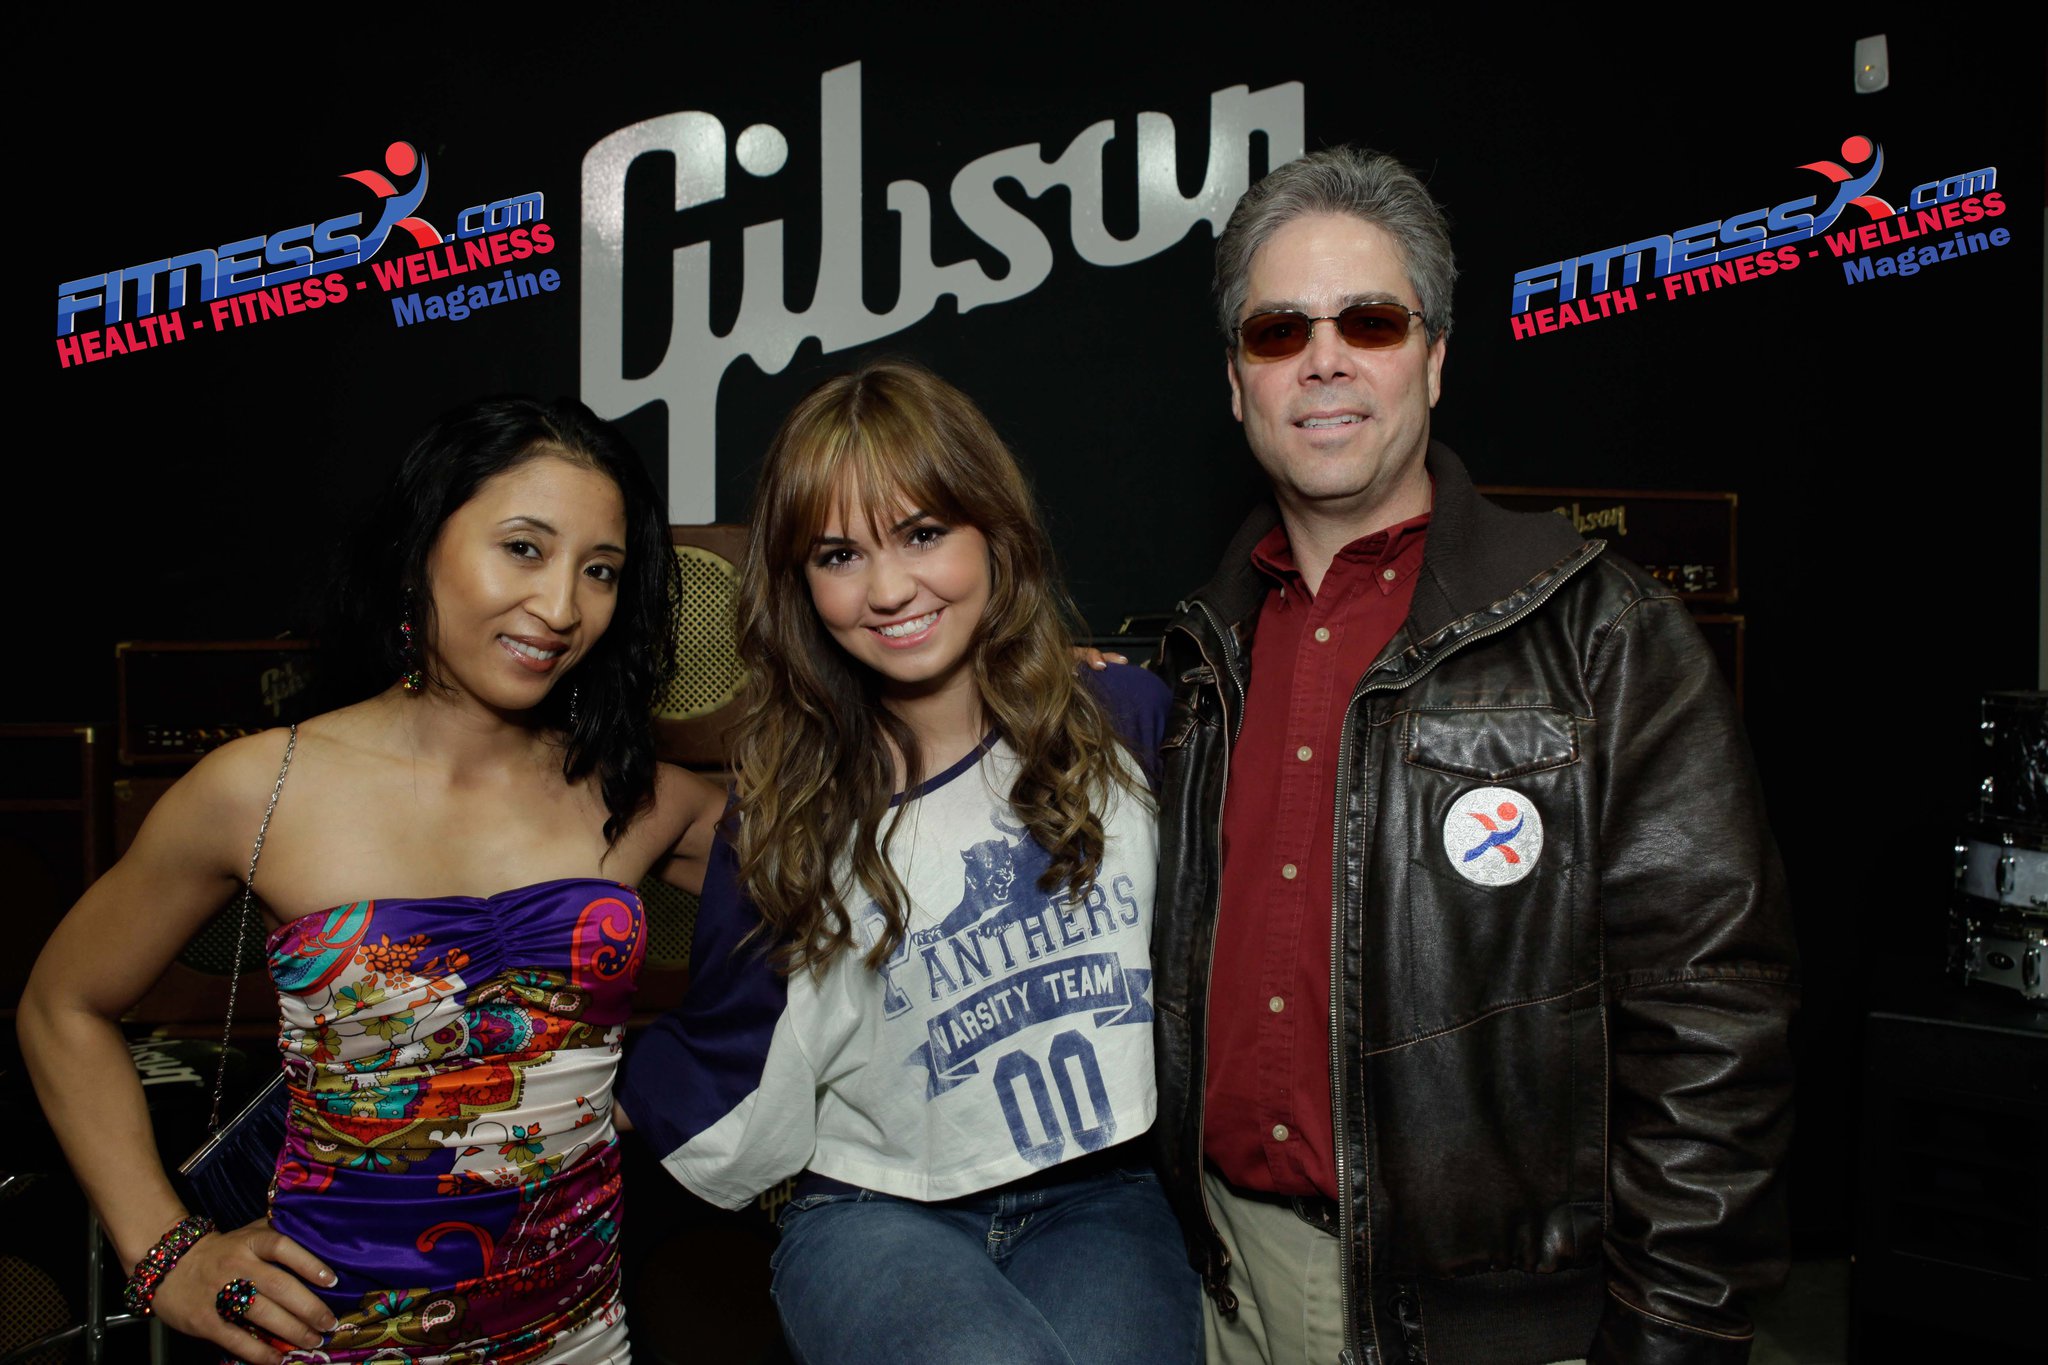 Celeste Kellogg, BillyBow & Katherine Aguirre at Gibson Guitars Center 2011. http://www.imdb.com/name/nm3364469/?ref_=fn_al_nm_1